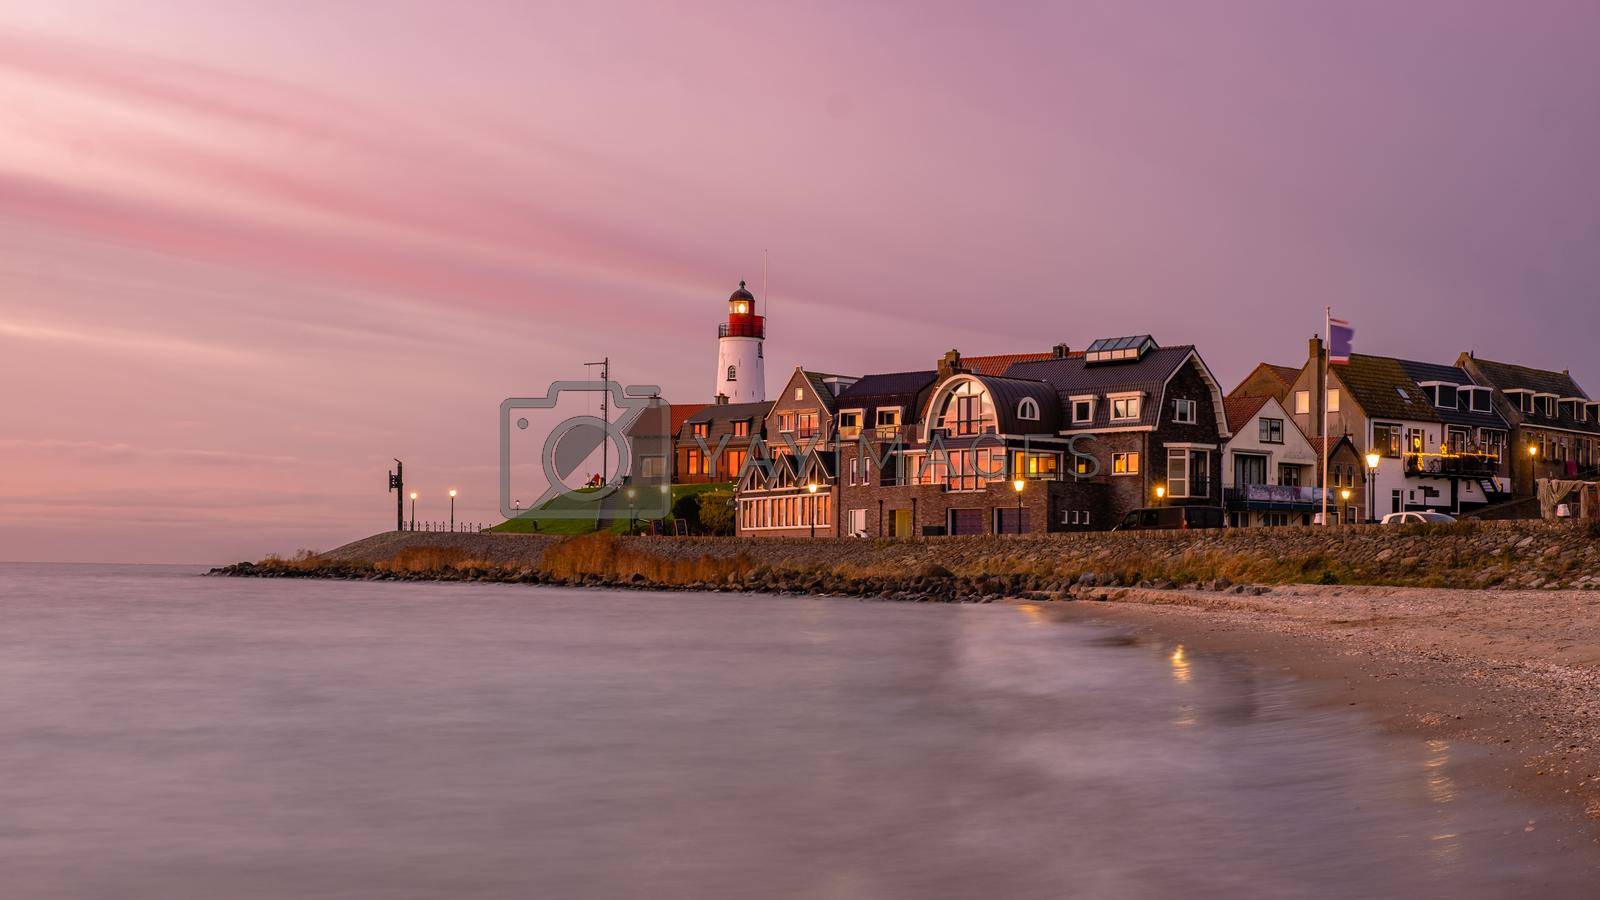 Royalty free image of Urk Flevoland Netherlands sunset at the lighthouse and harbor of Urk Holland by fokkebok